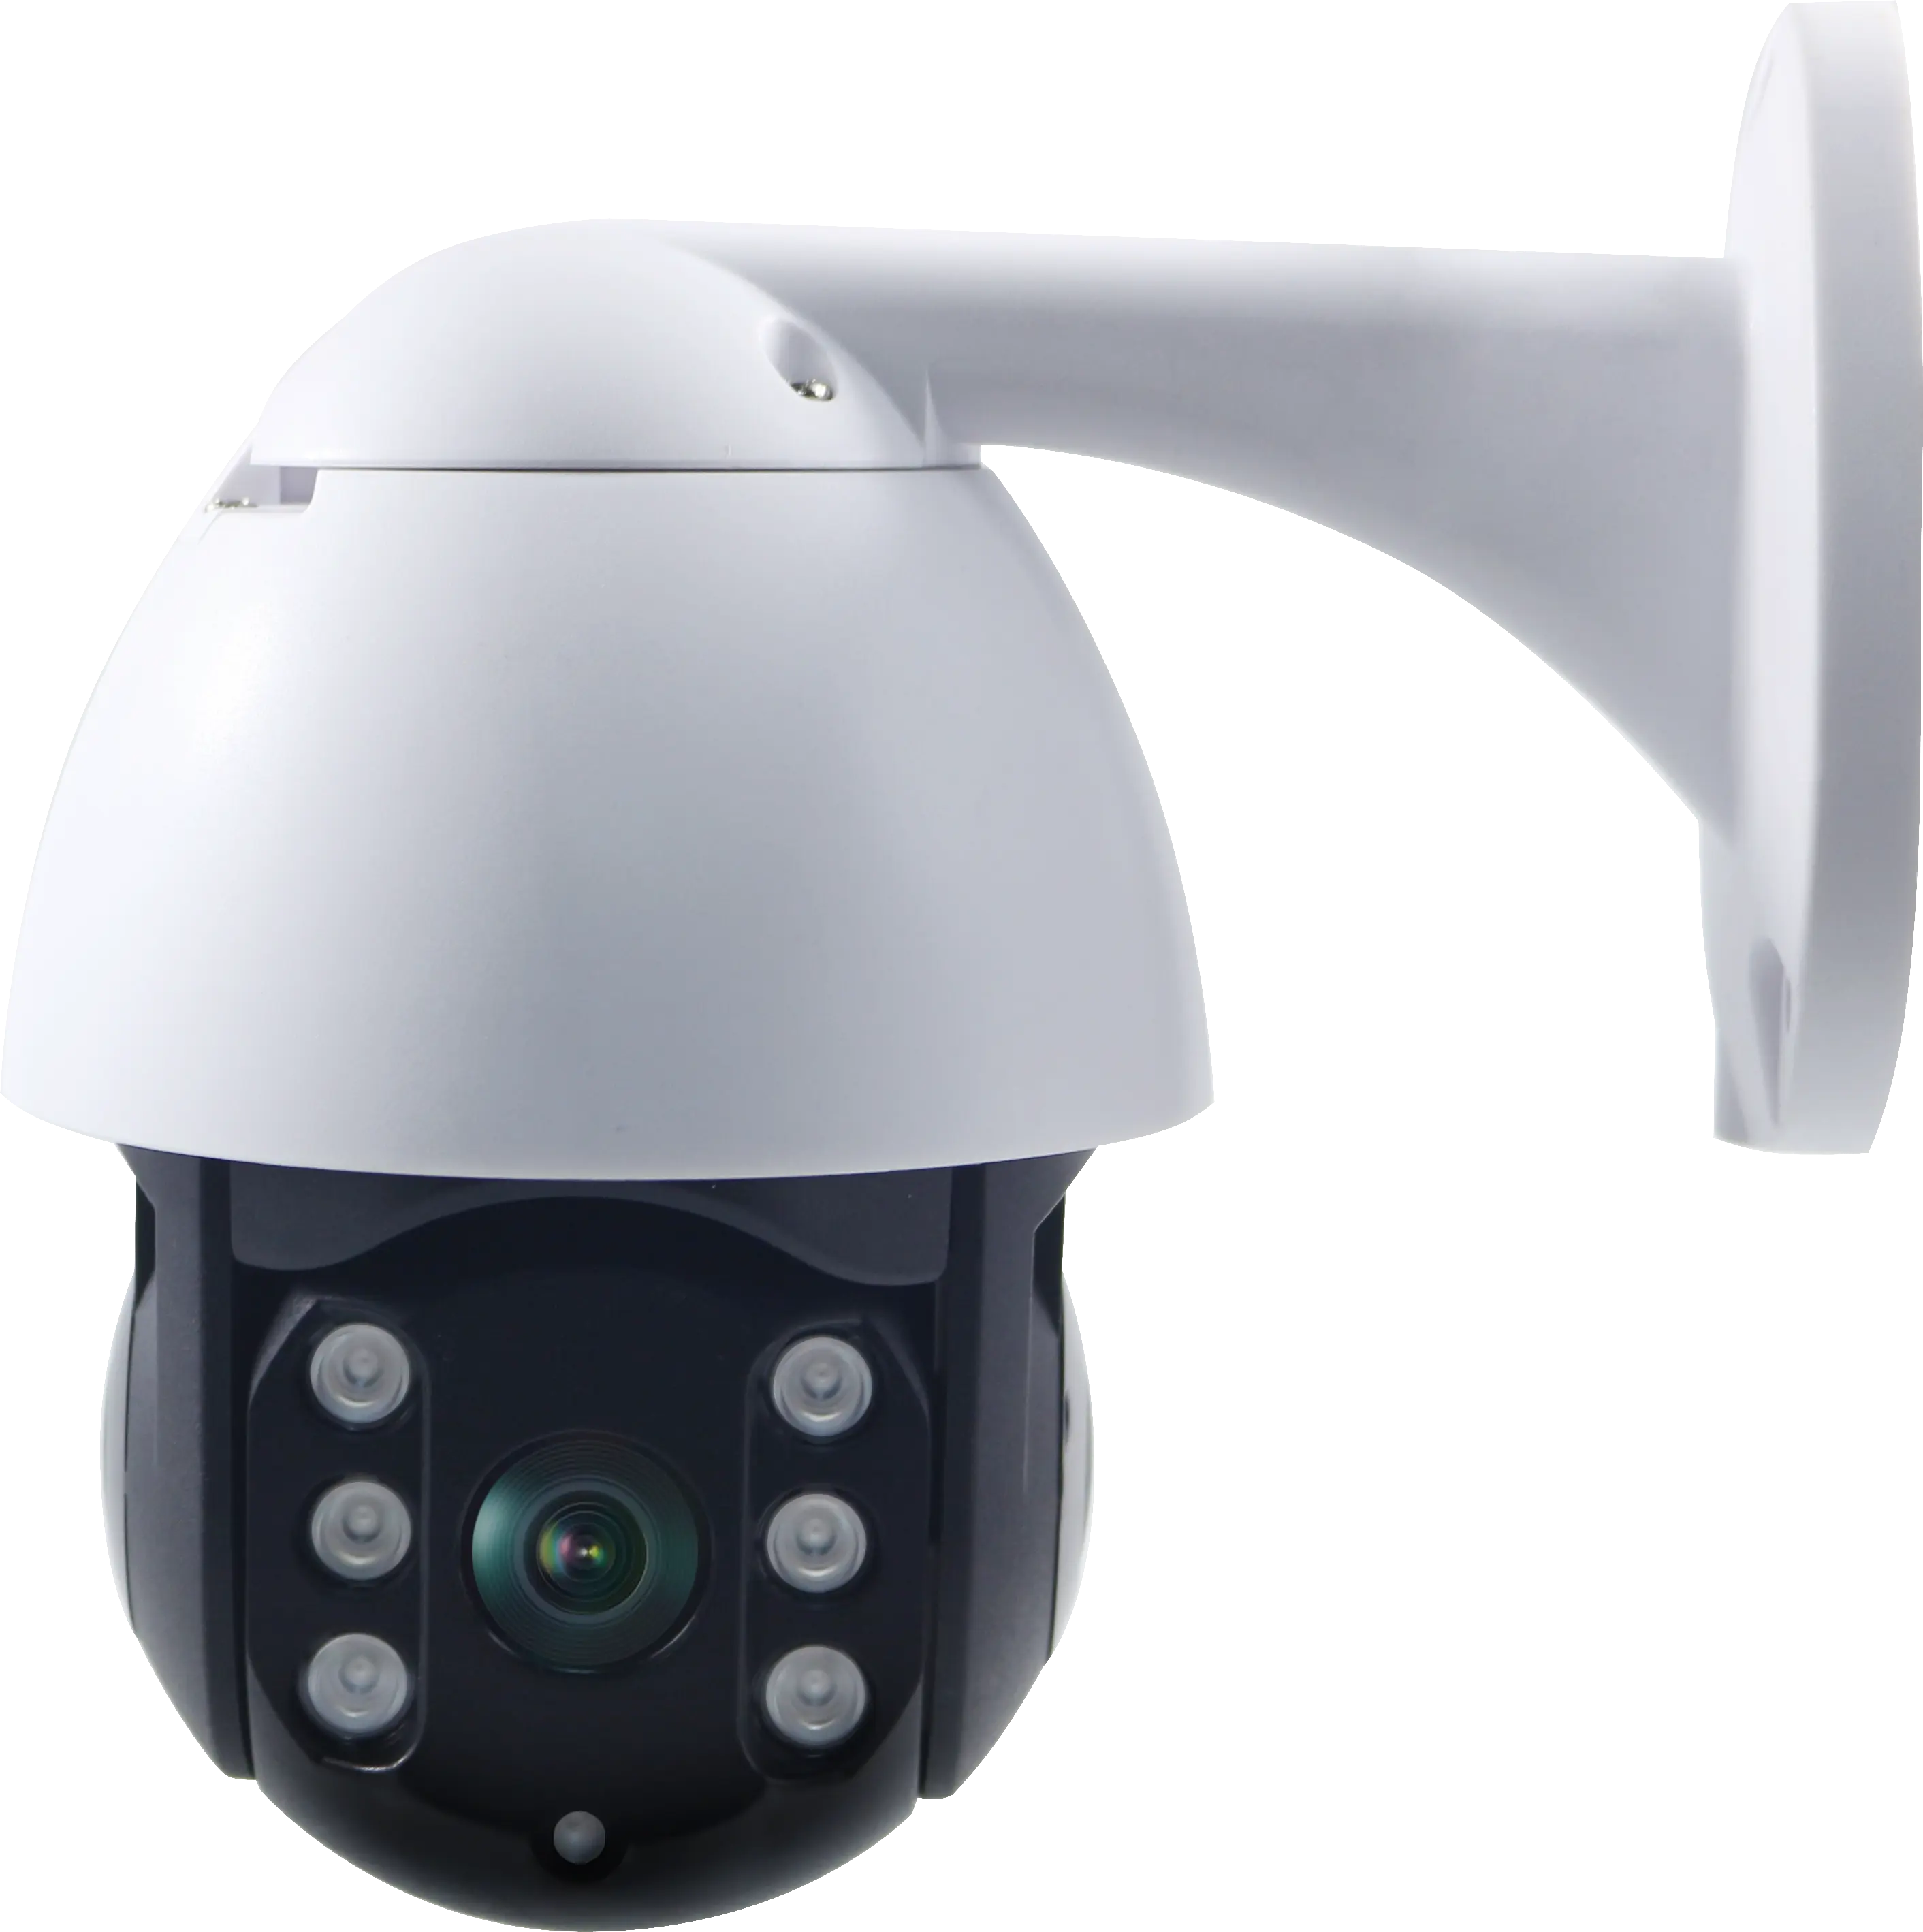 1080p Ptz Wifi Camera Long Range Outdoor Two Way Audio Dome Camara 2mp Security Ip Camera Hd Motion Detection Cctv Camera